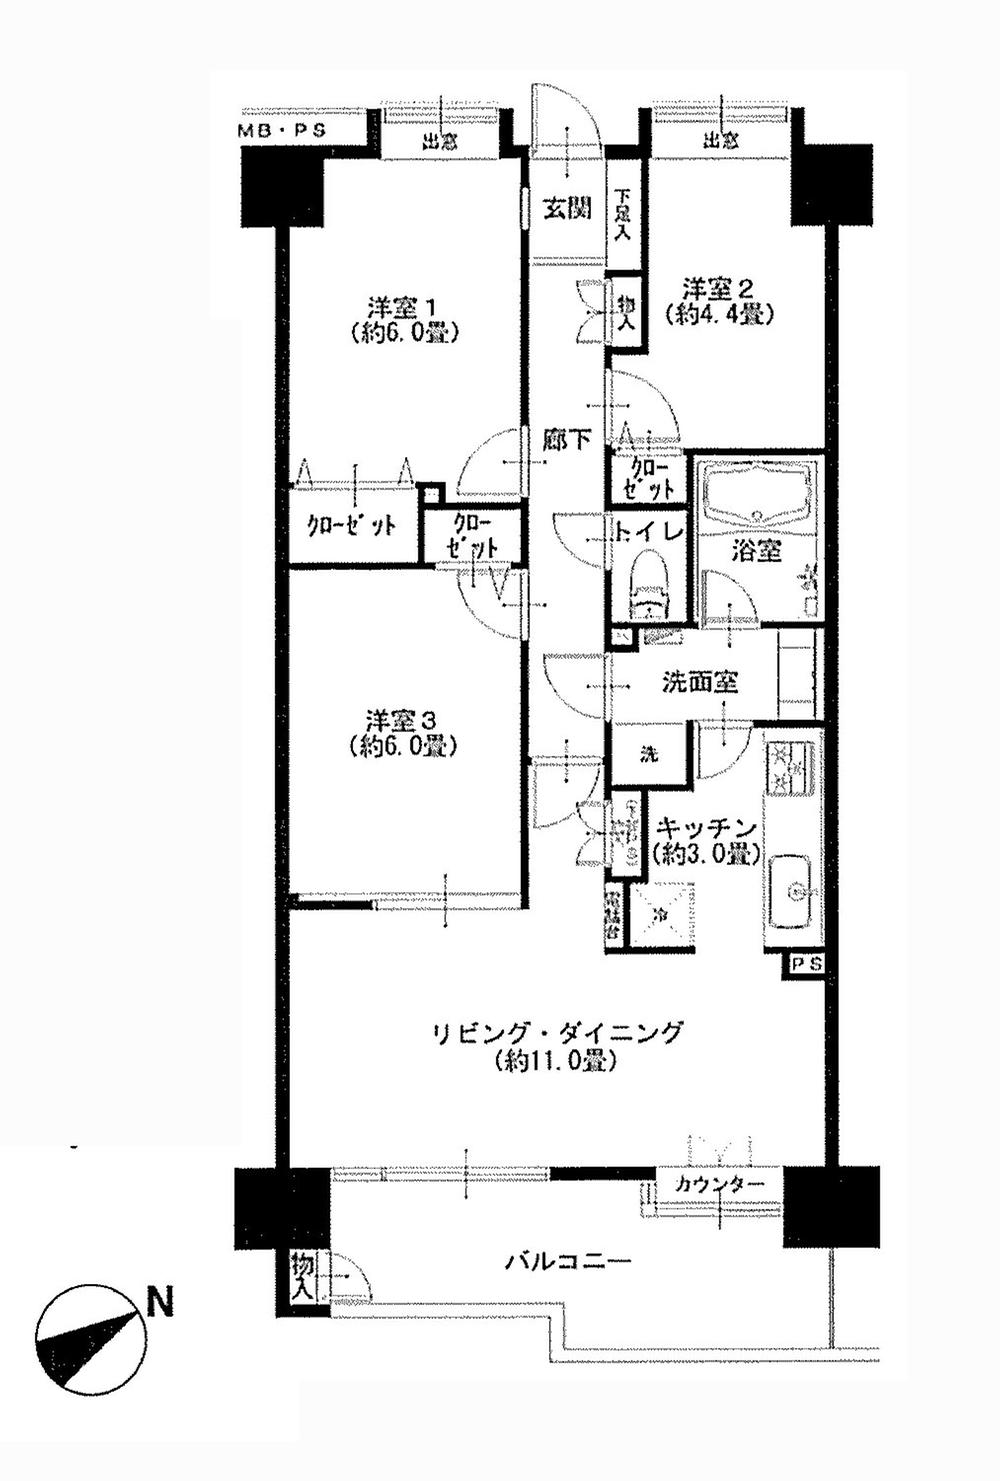 Floor plan. 3LDK, Price 29,900,000 yen, Footprint 68 sq m , Balcony area 9.02 sq m